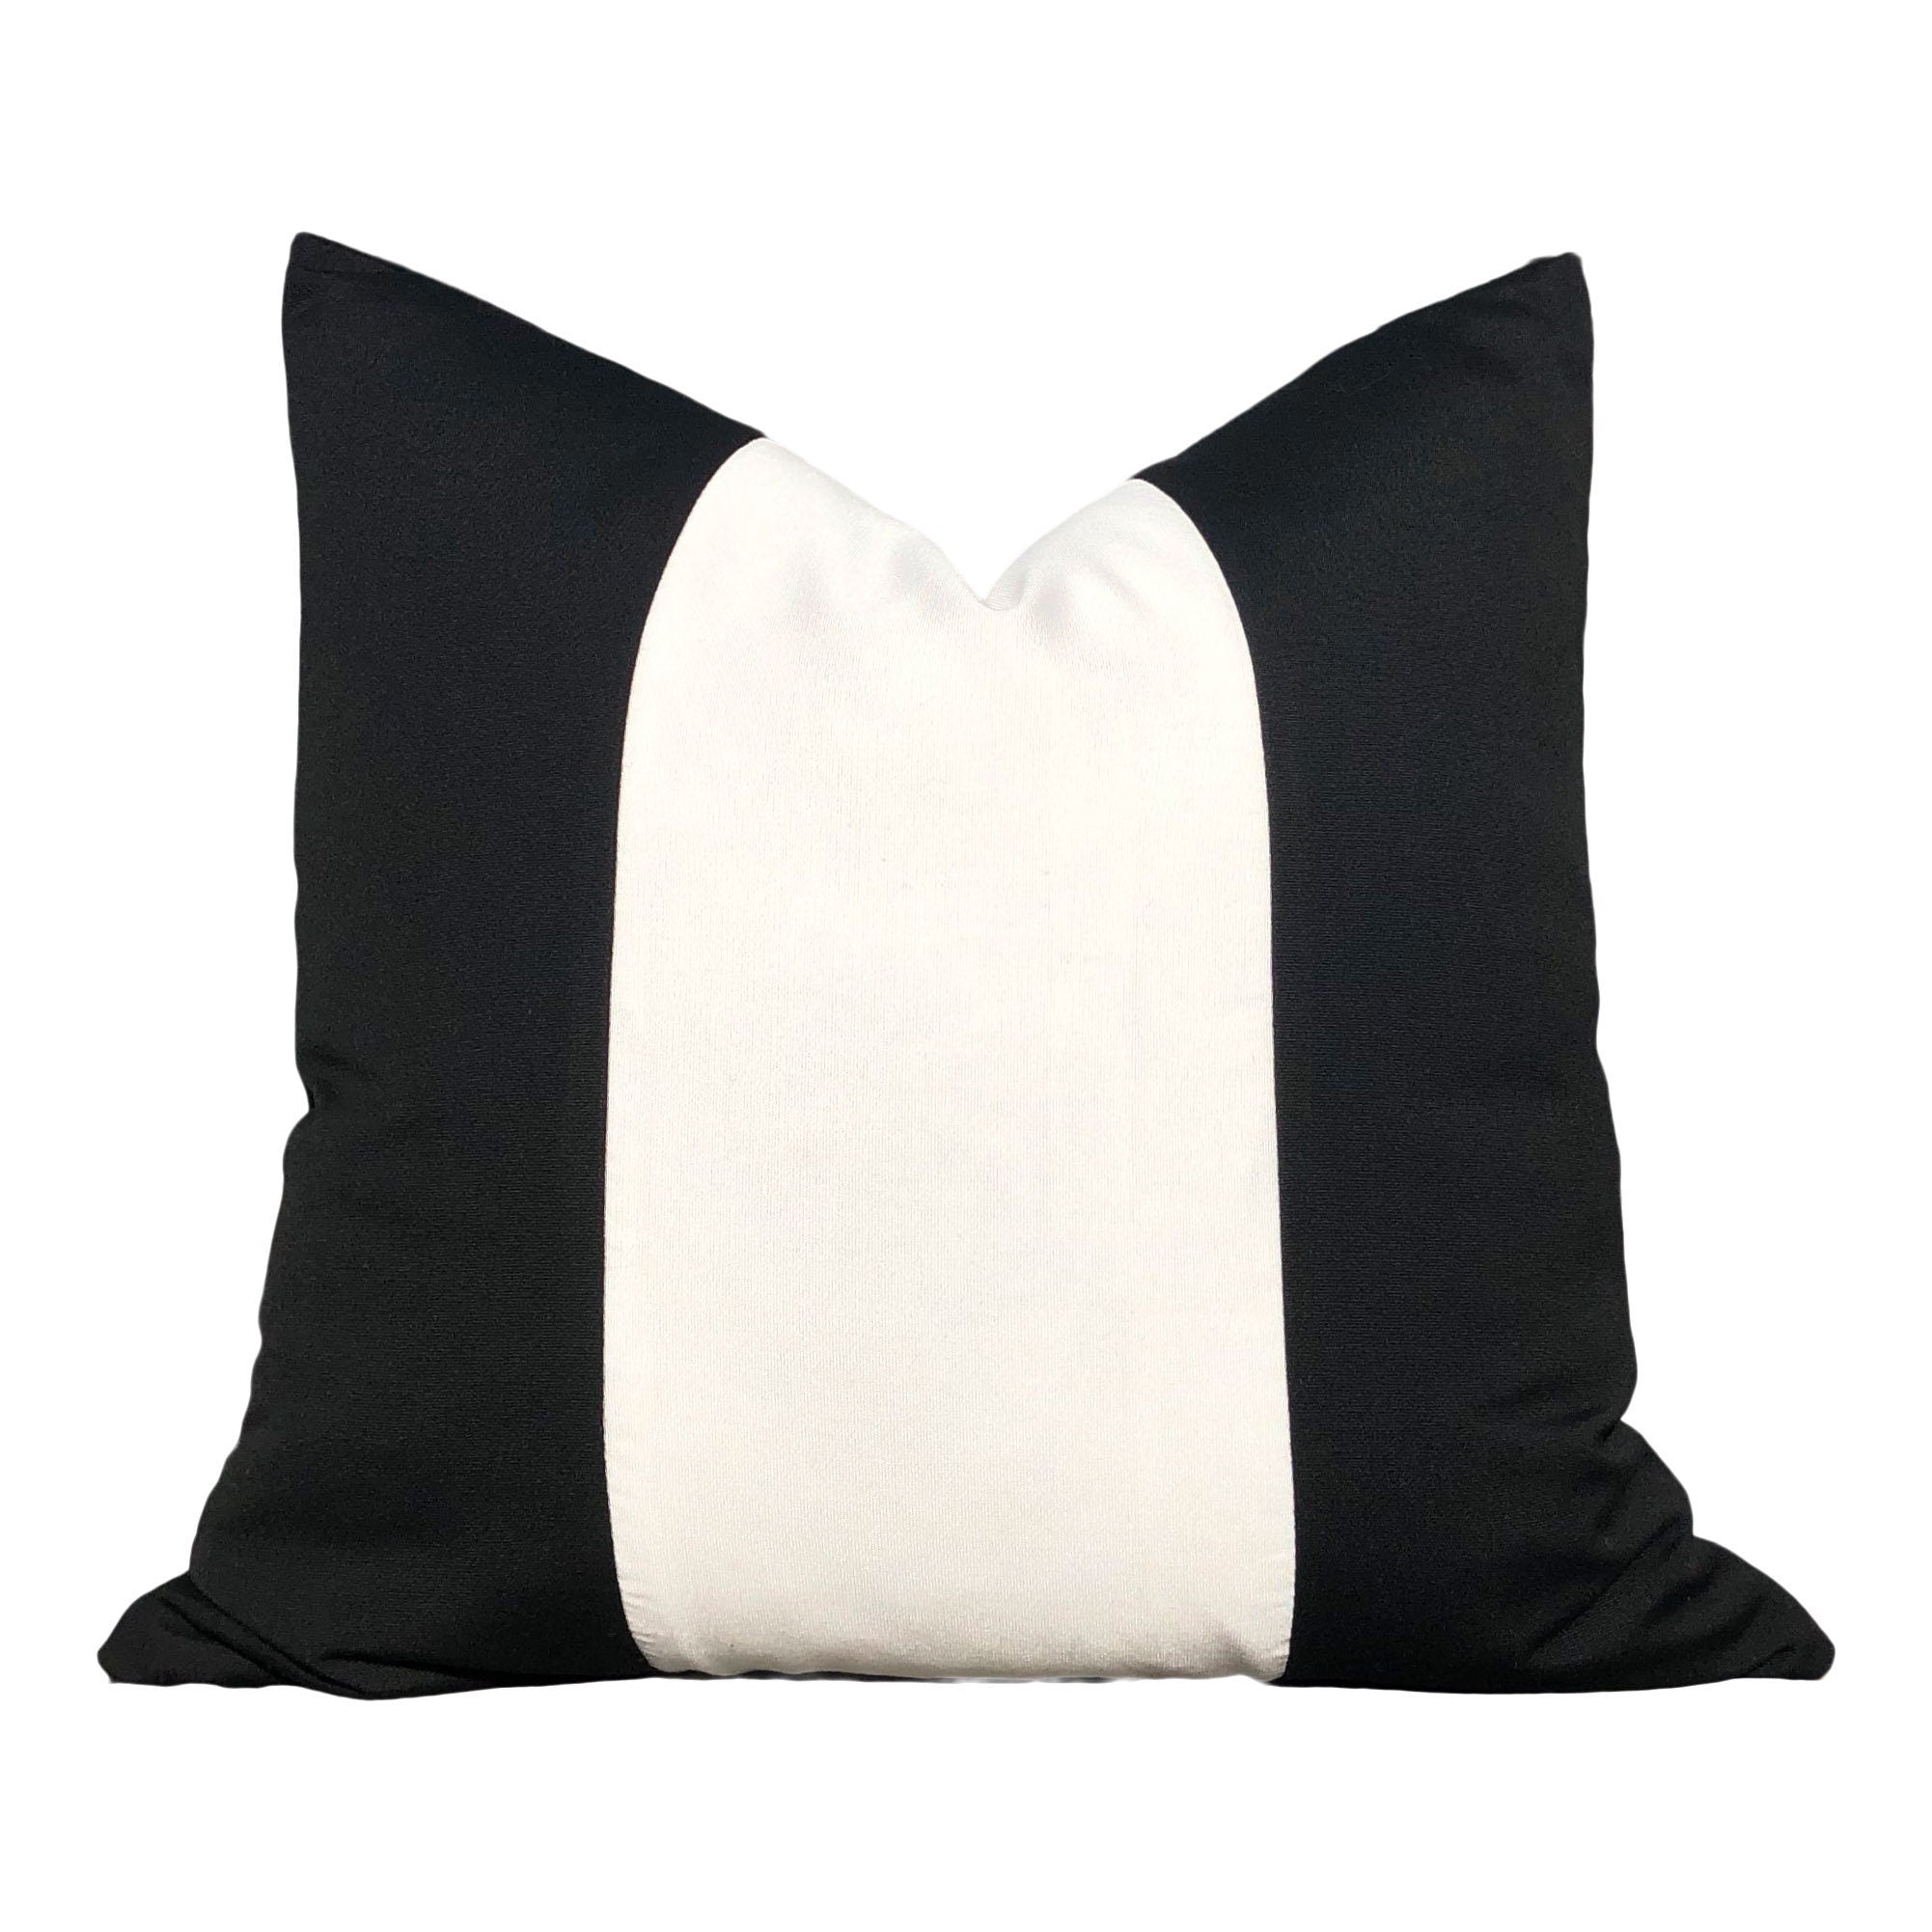 Sunbrella Black and White Striped Outdoor Pillow.